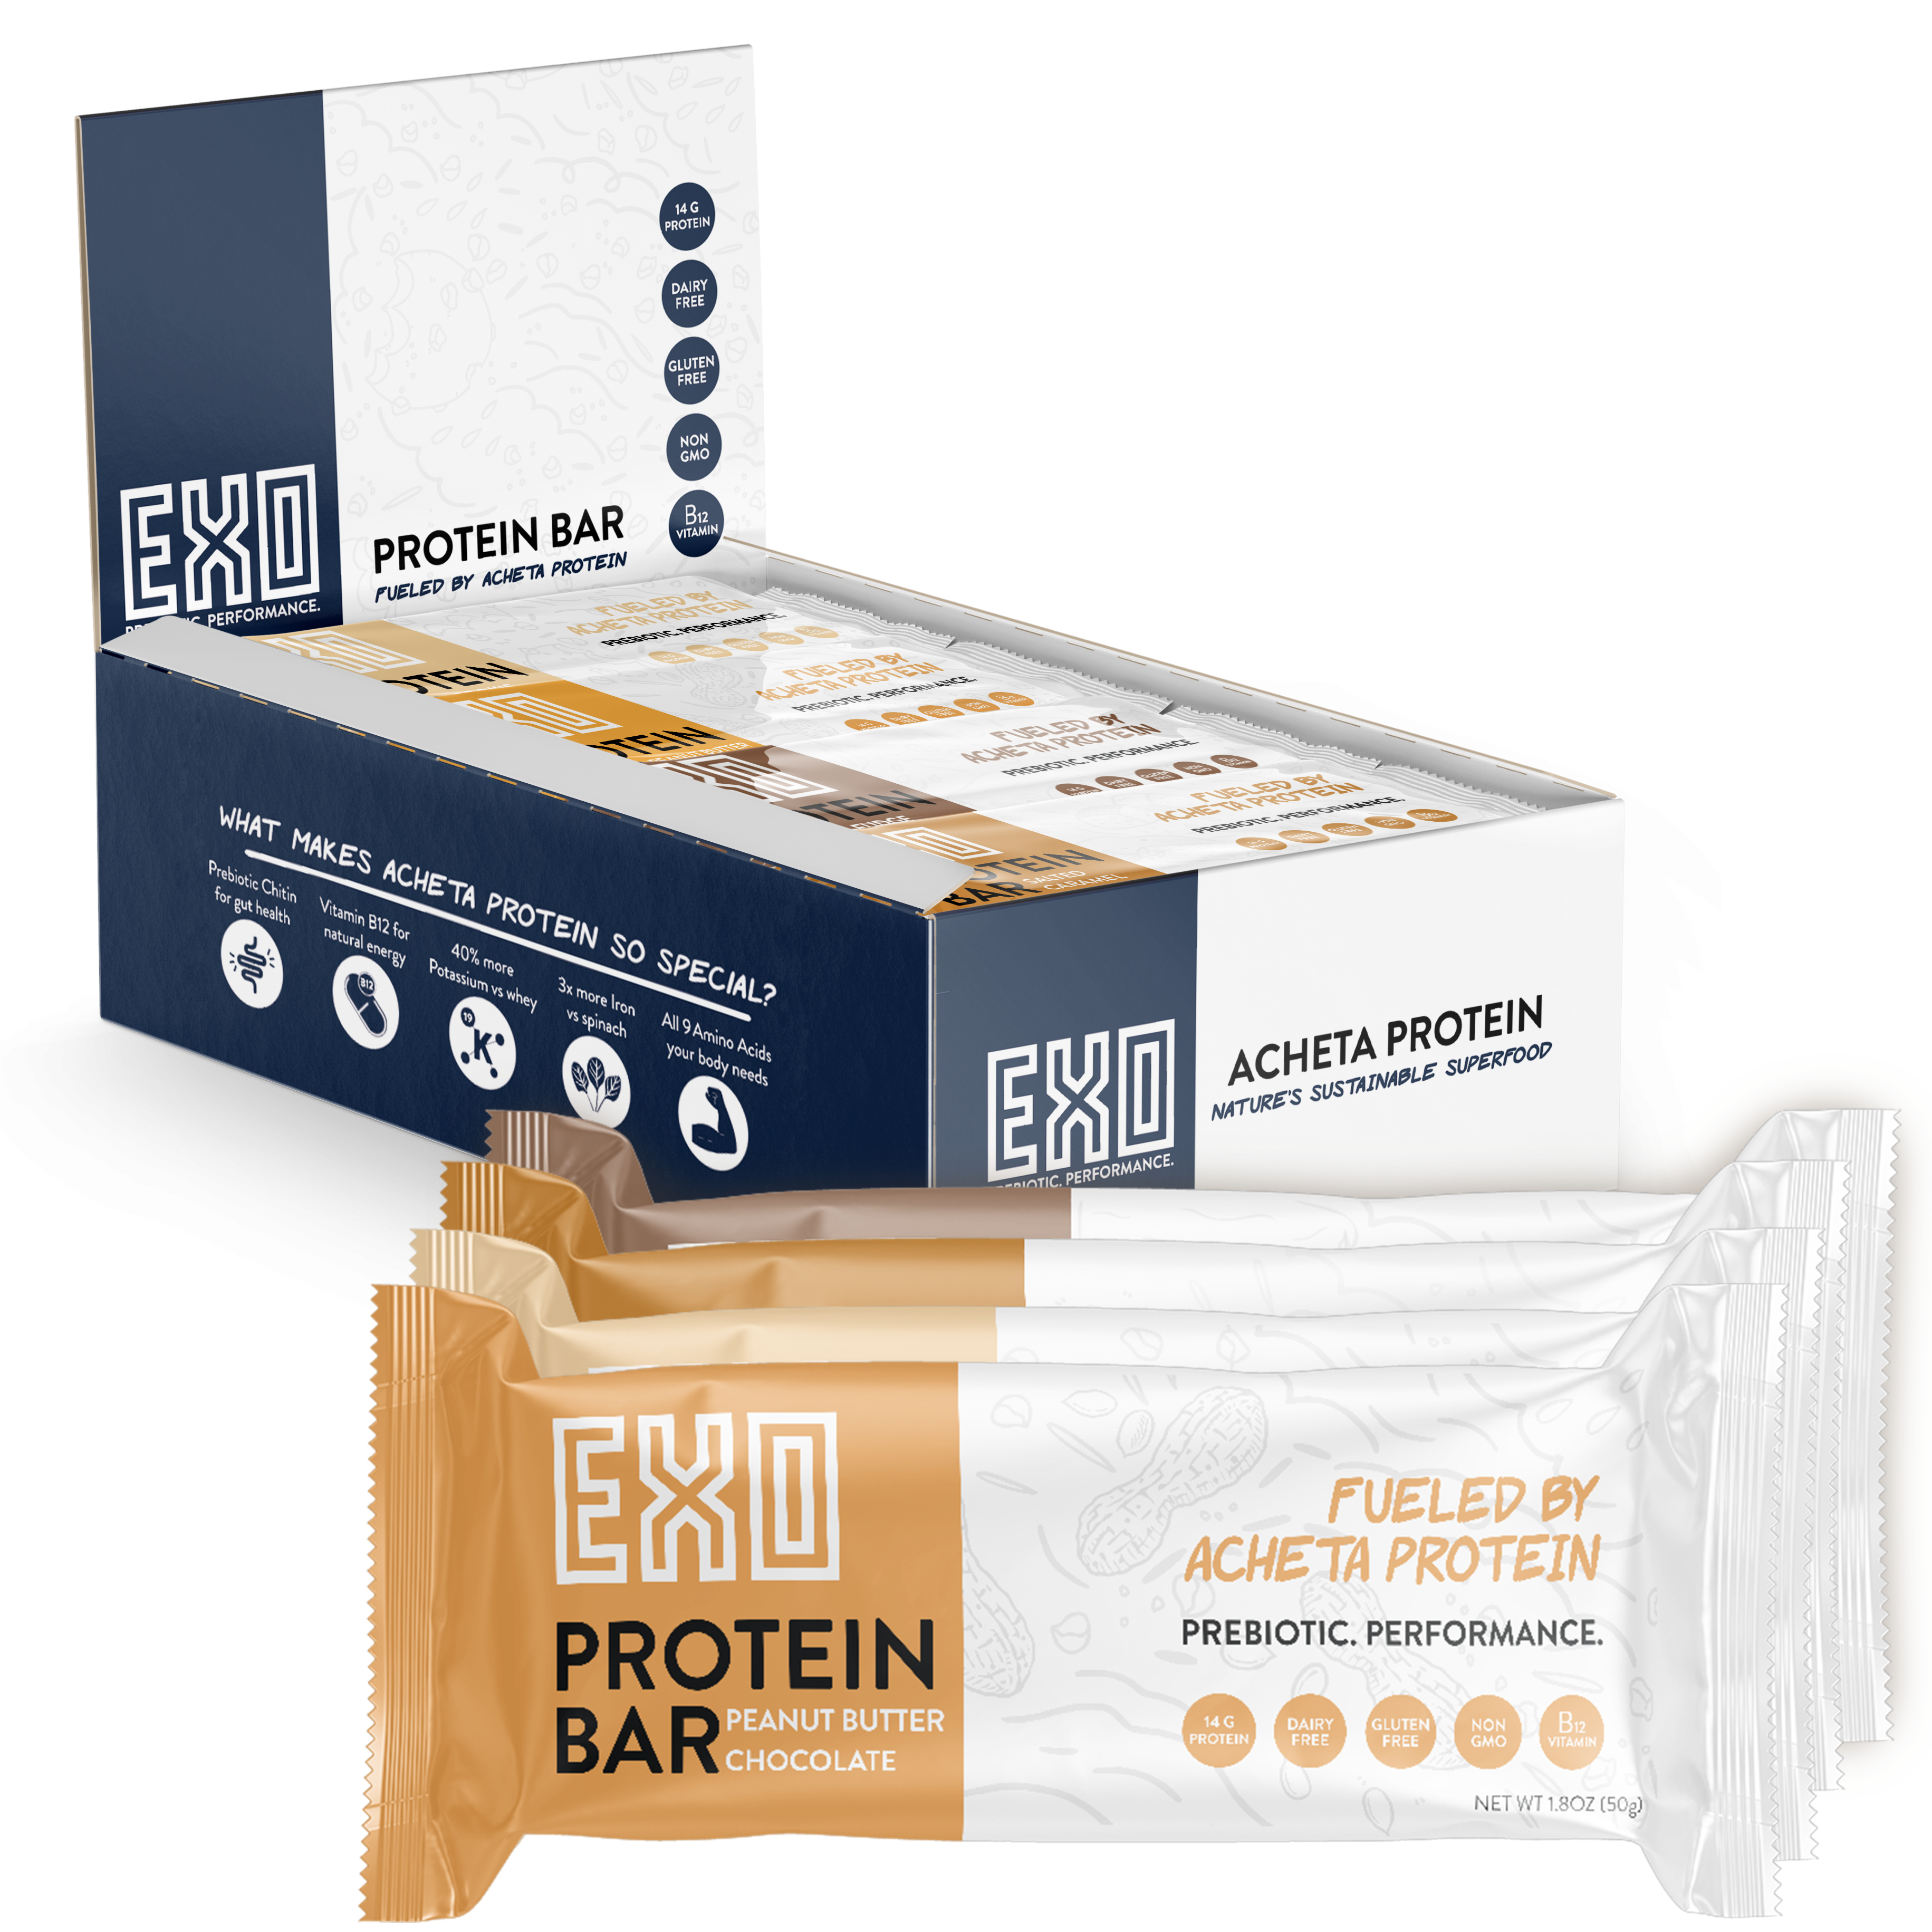 Protein Bar - EXO